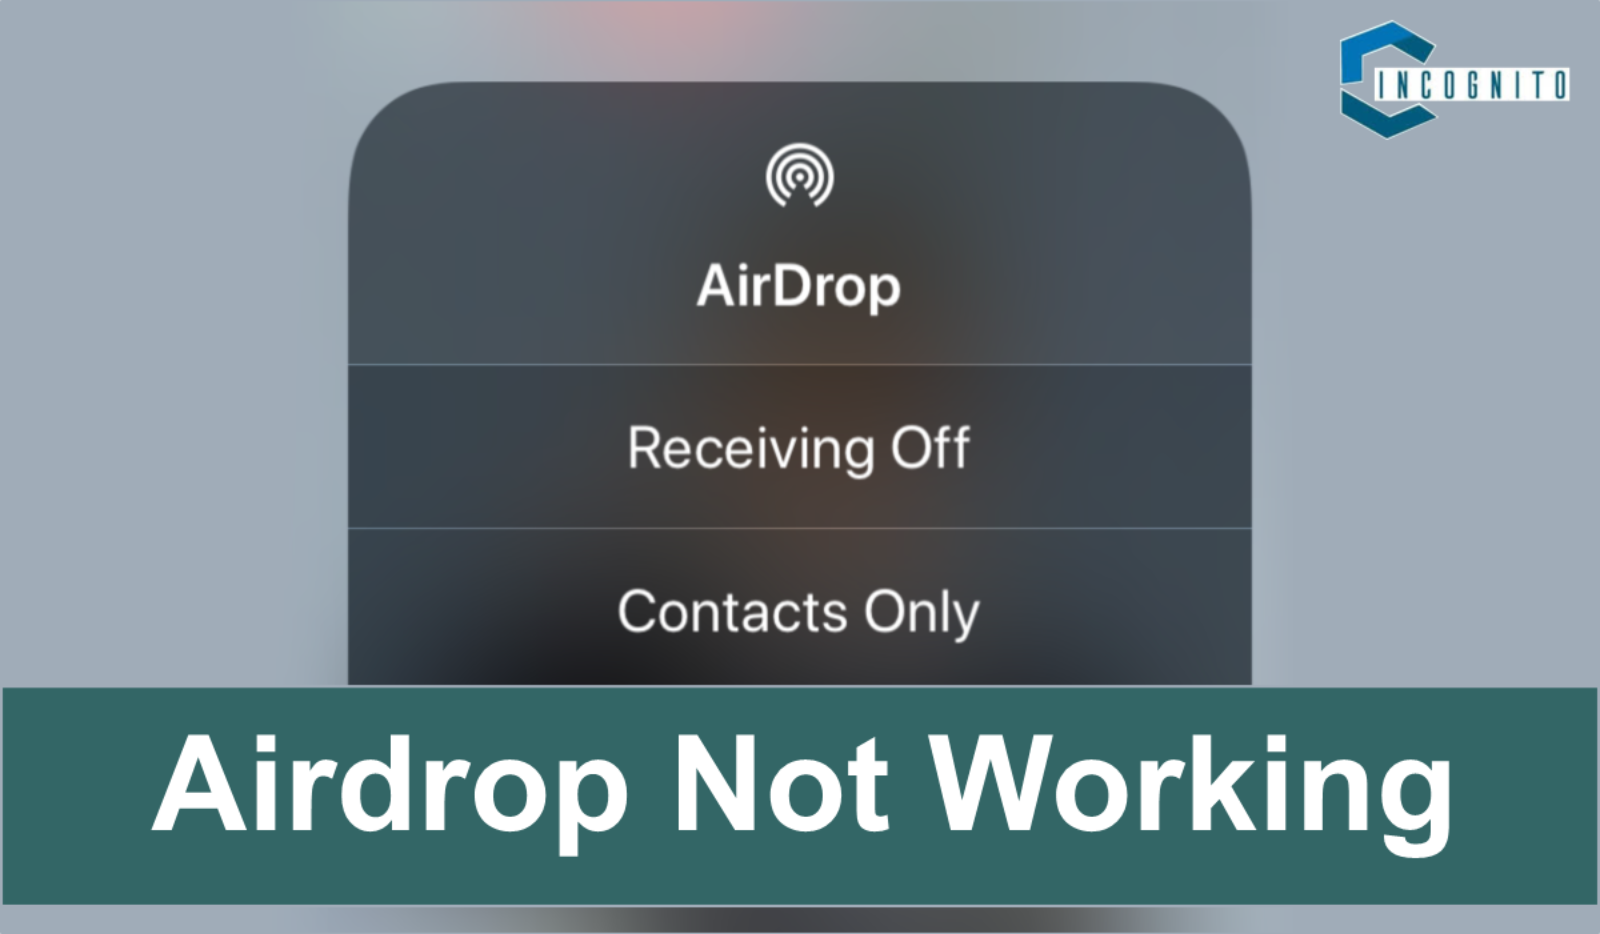 Airdrop not working